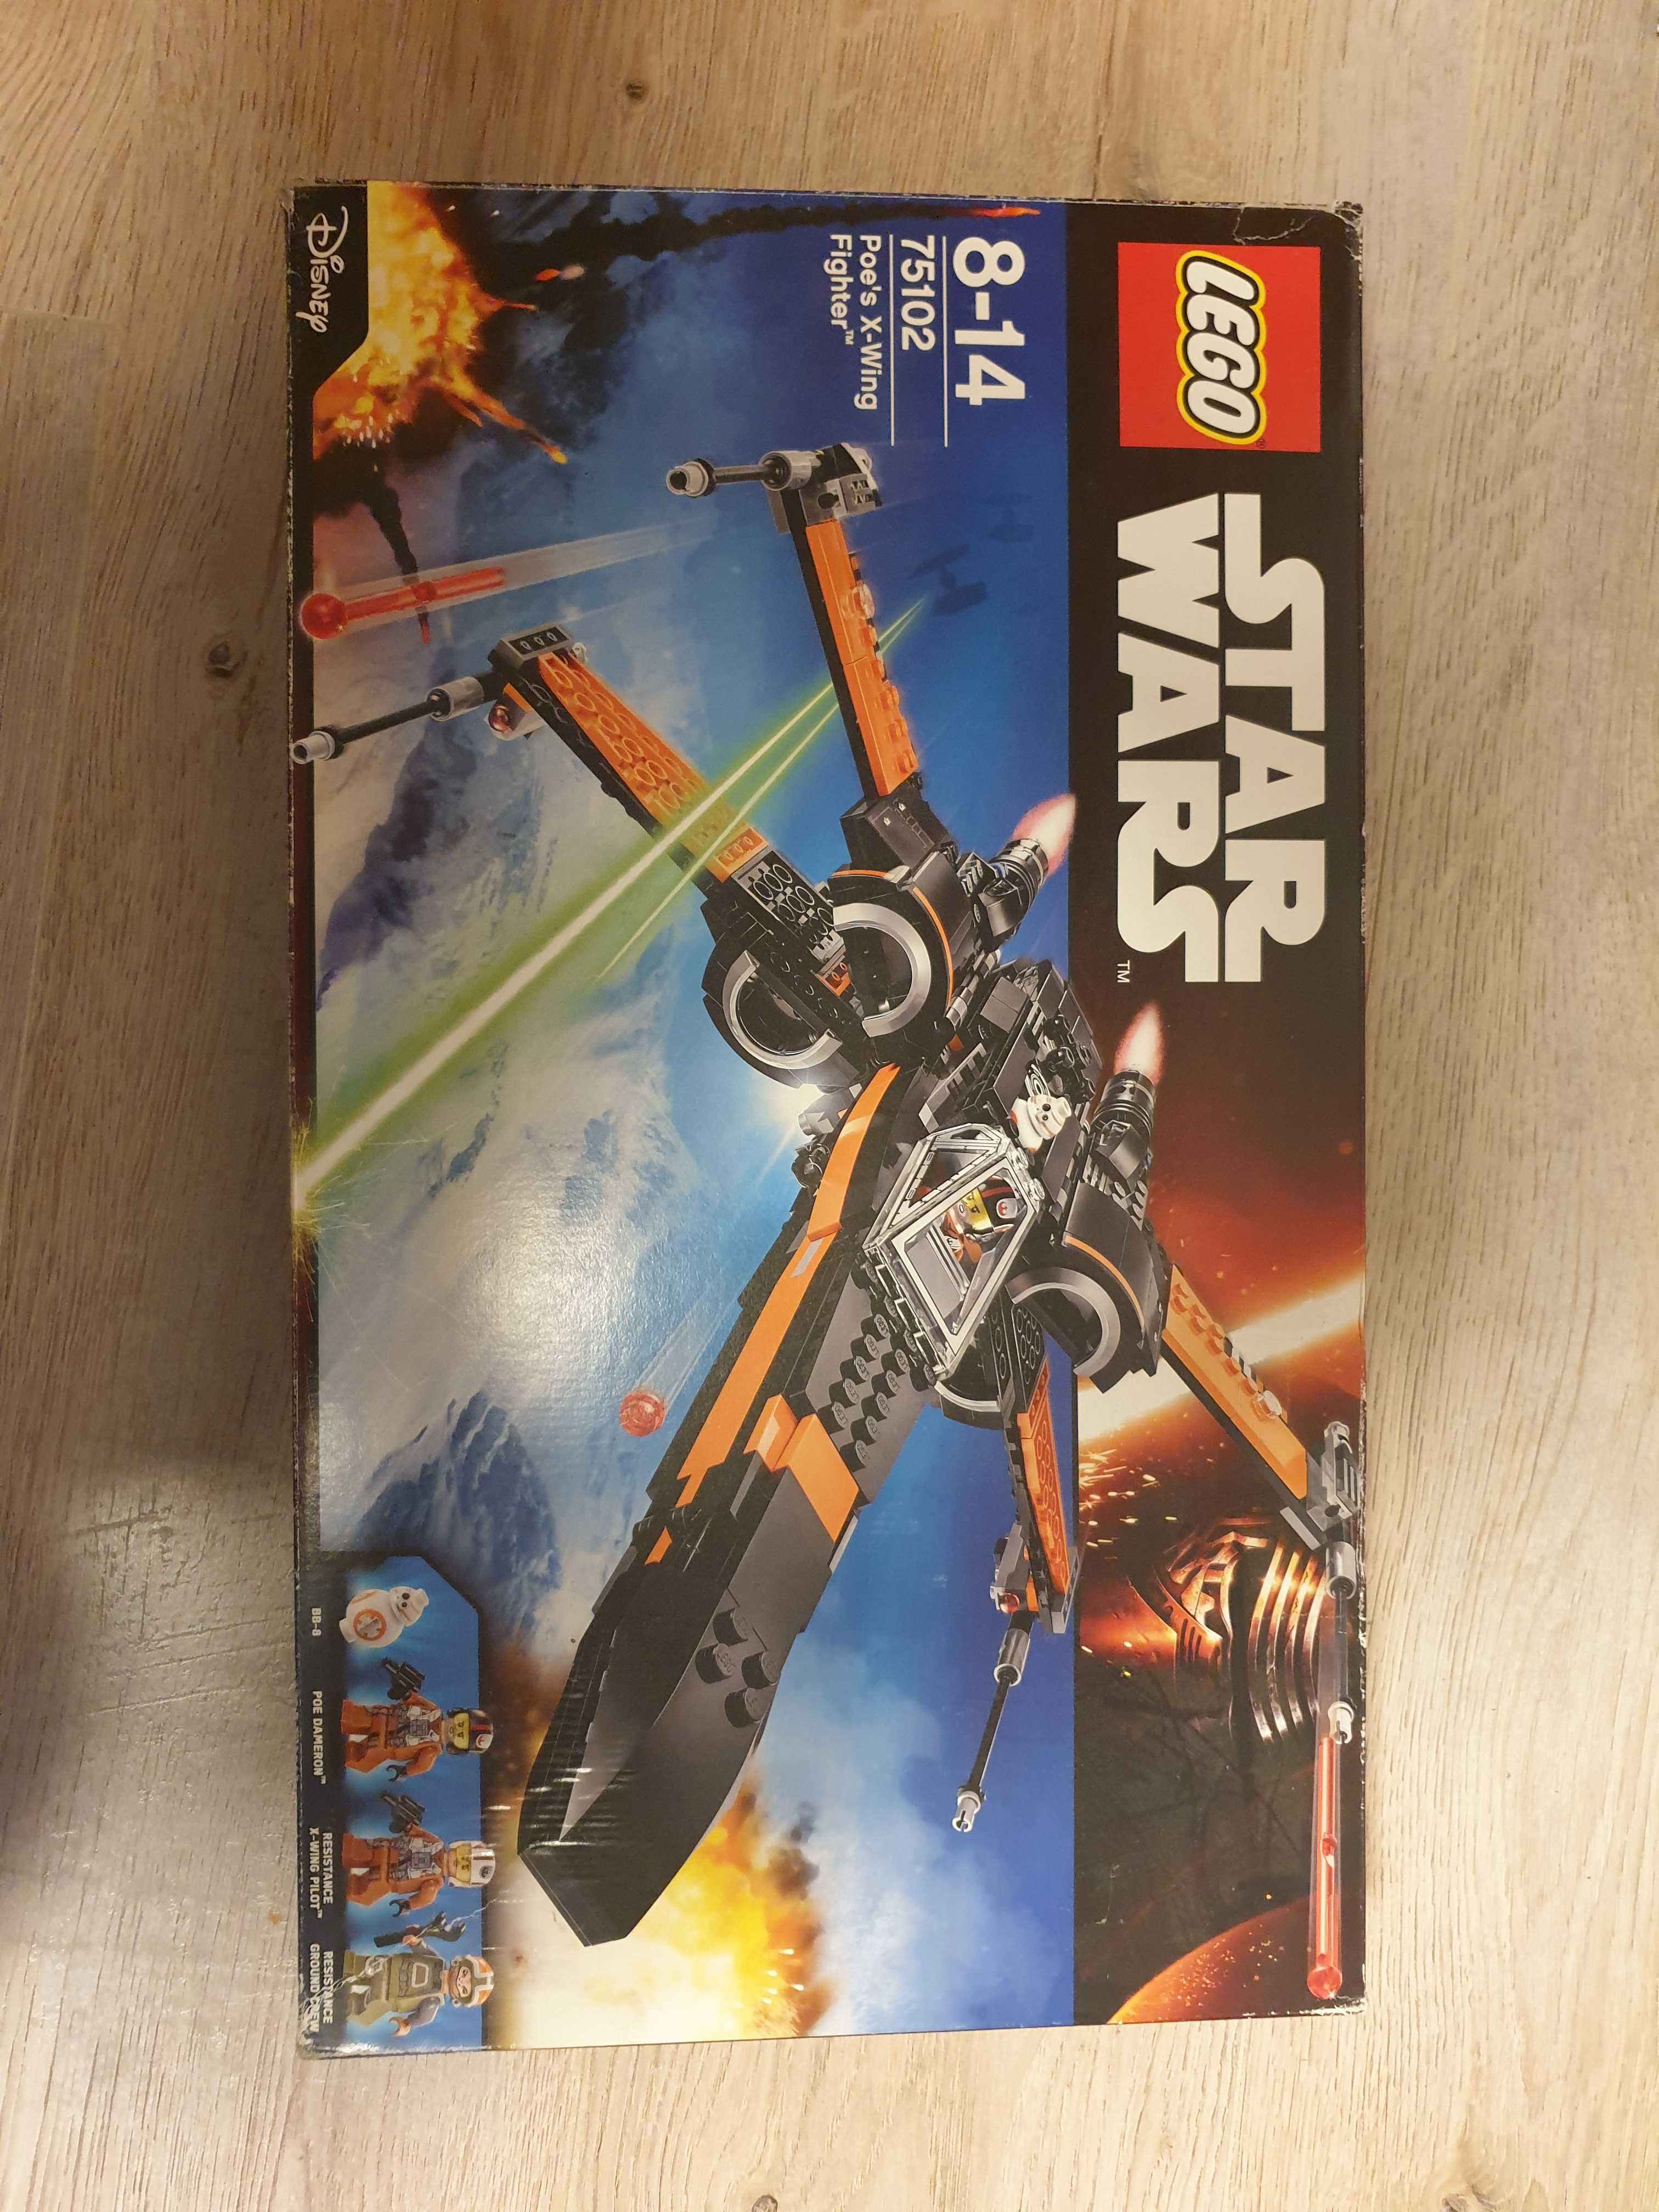 Set LEGO StarWars 75102 Poe's X-Wing Fighter